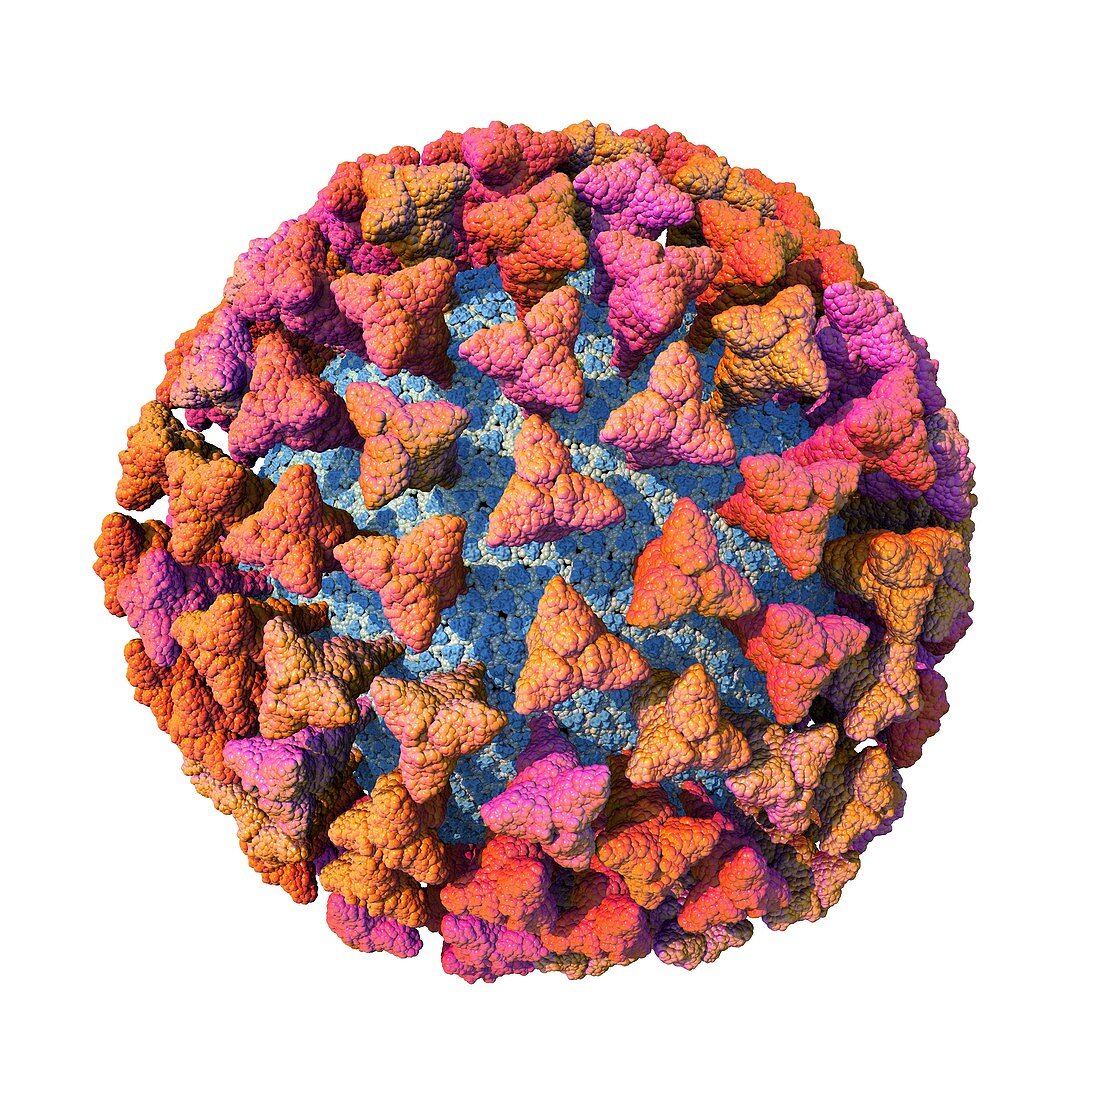 Covid-19 coronavirus particle, illustration